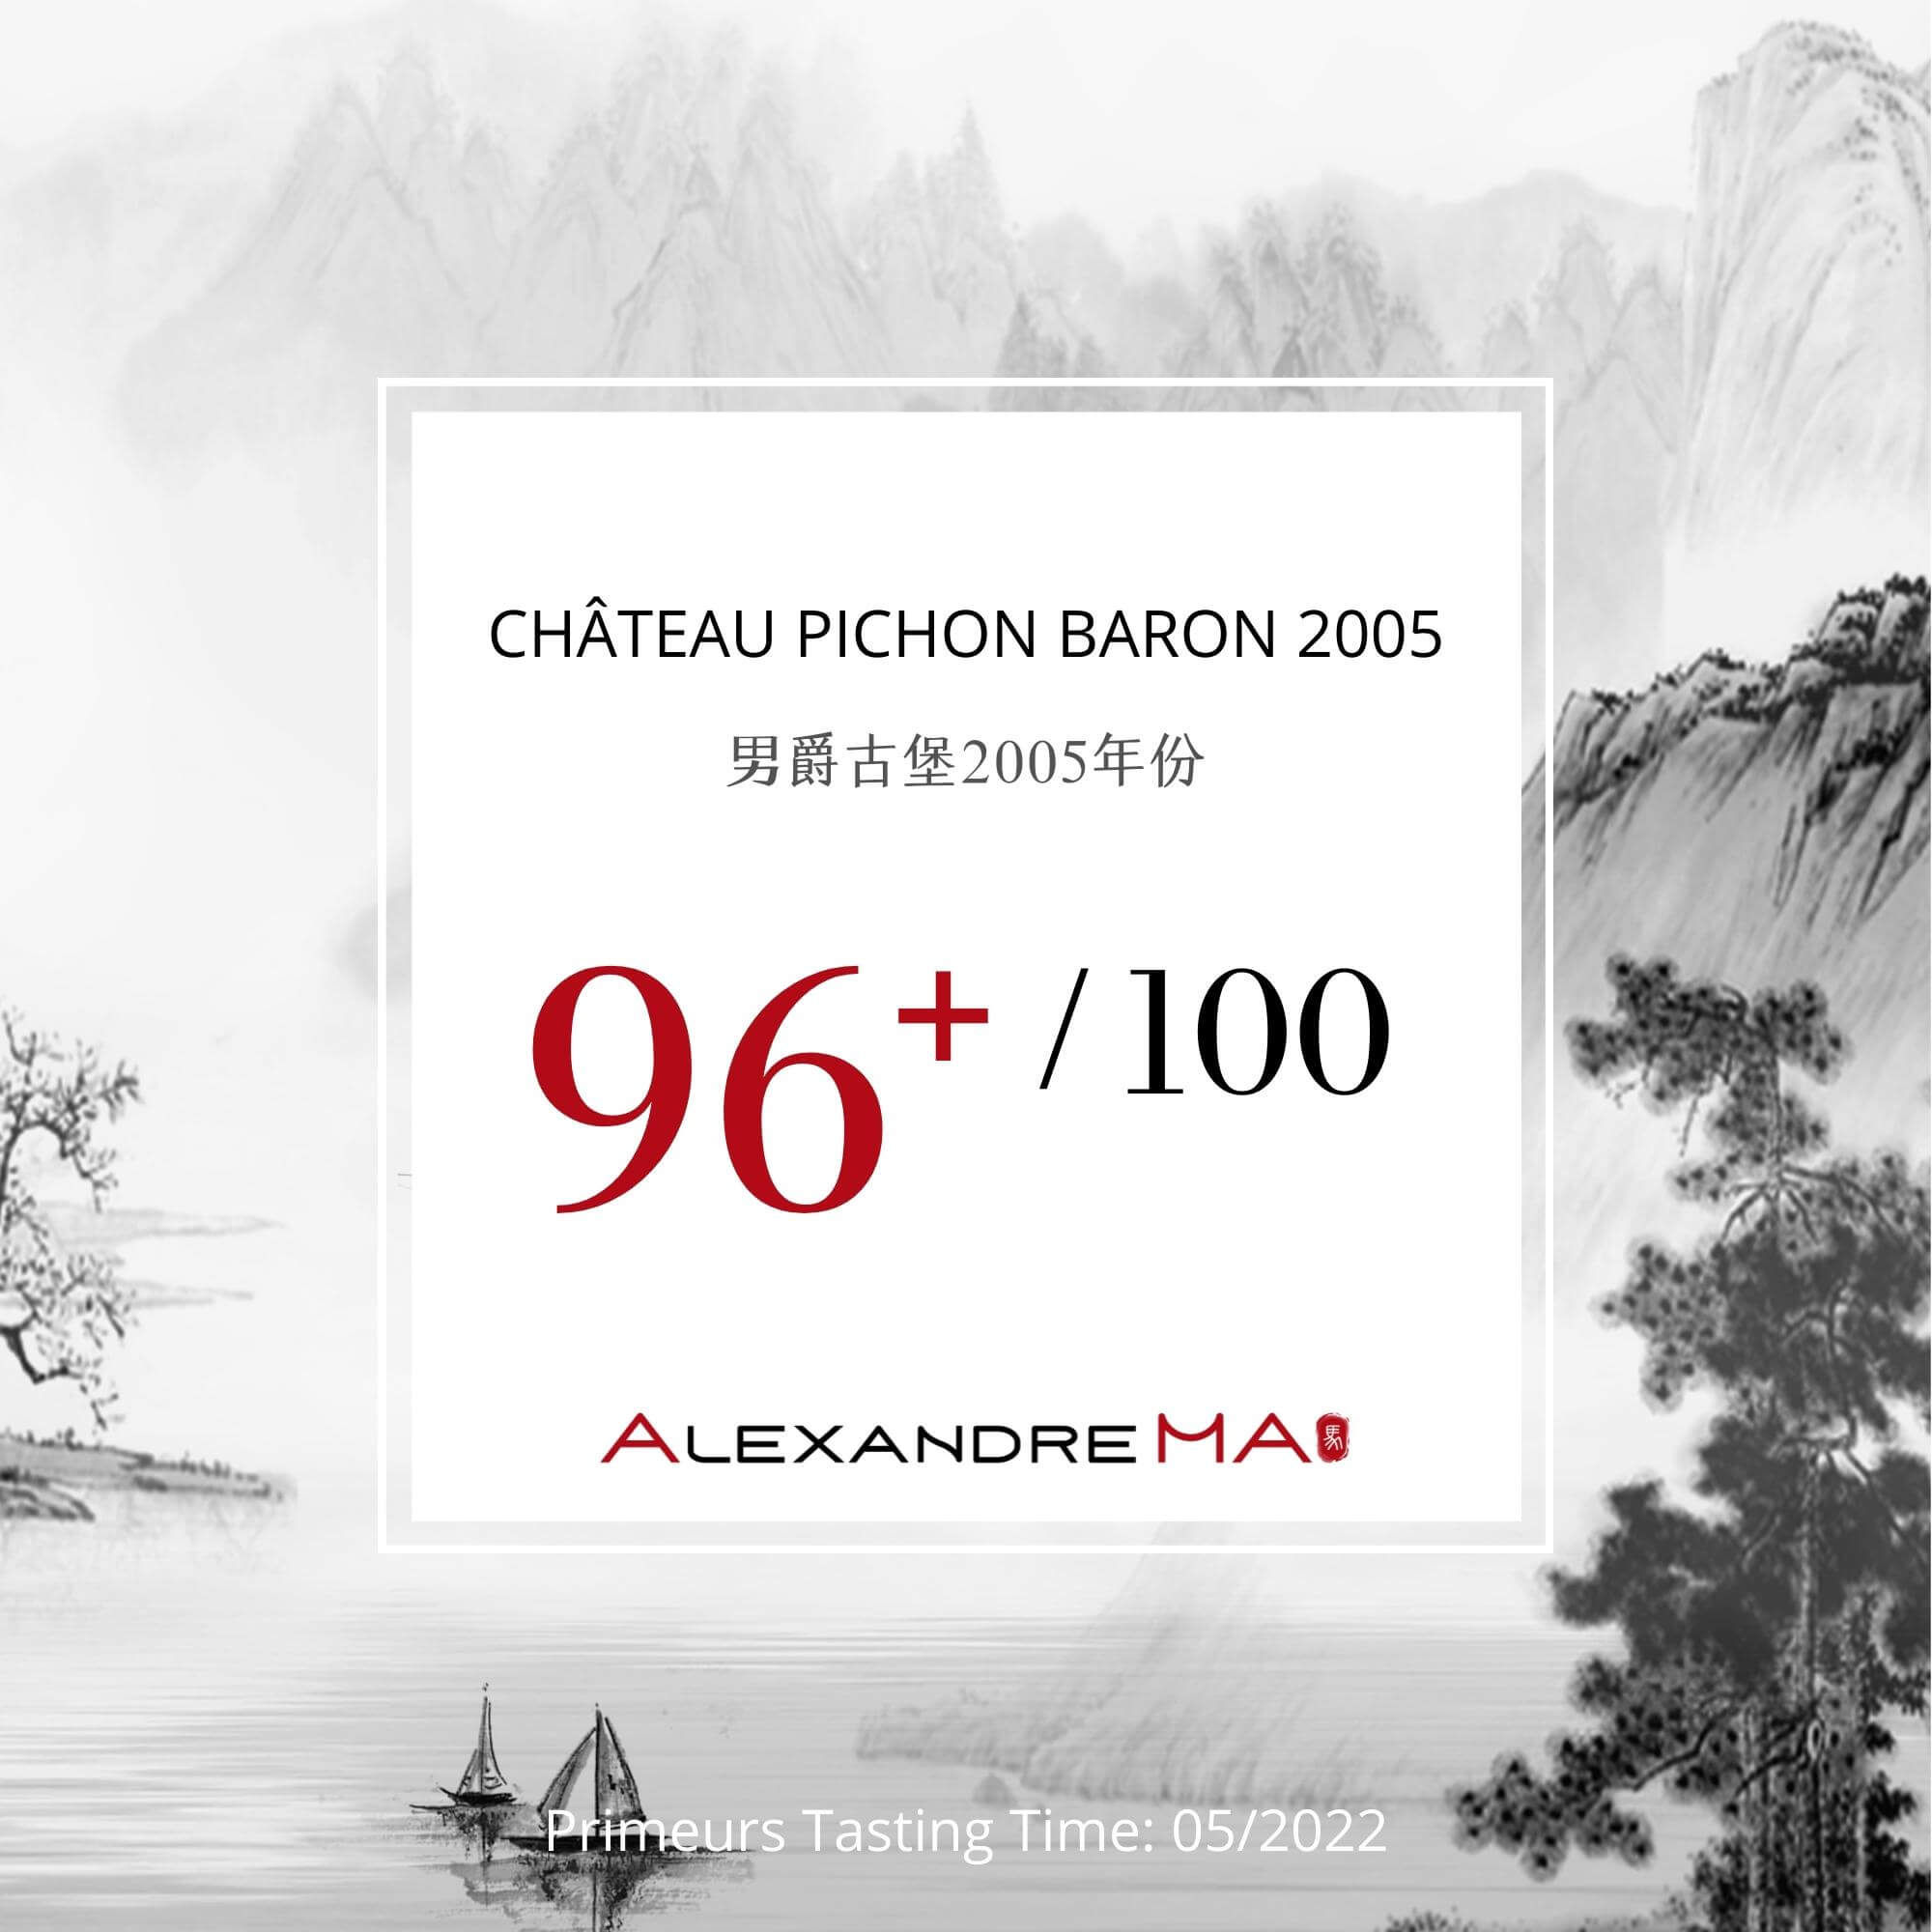 Château Pichon Baron 2005 - Alexandre MA